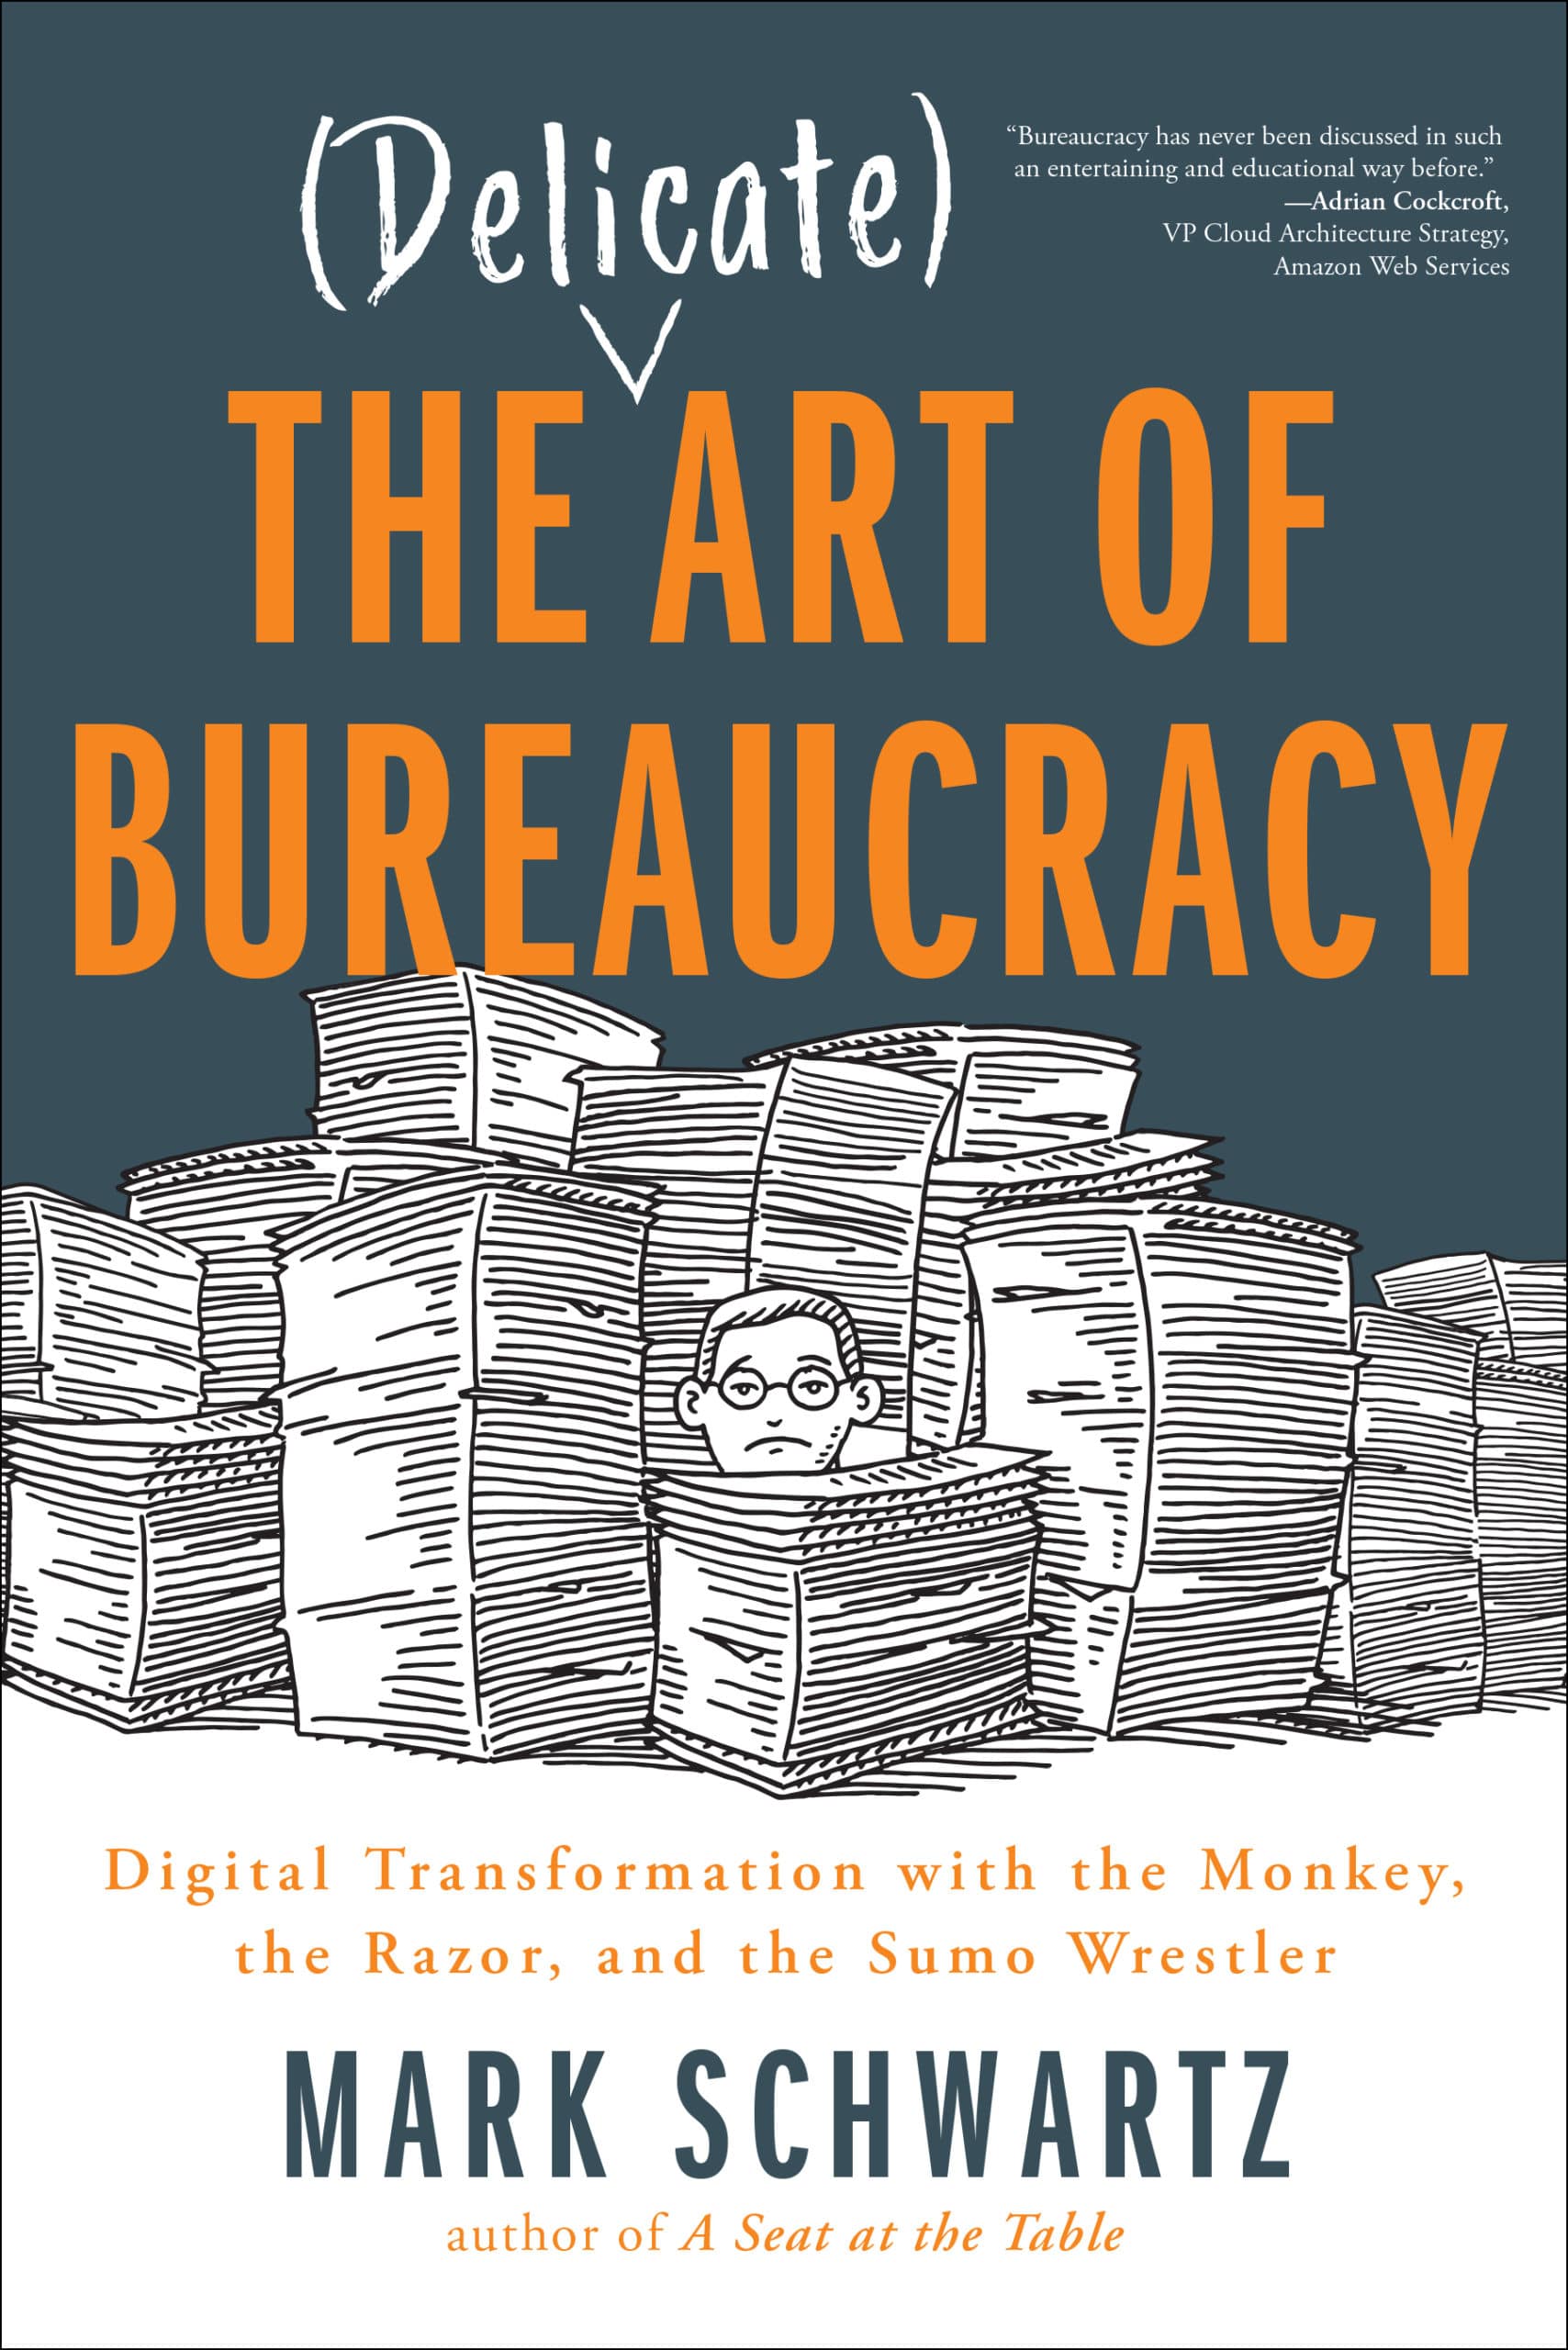 bureaucracy images